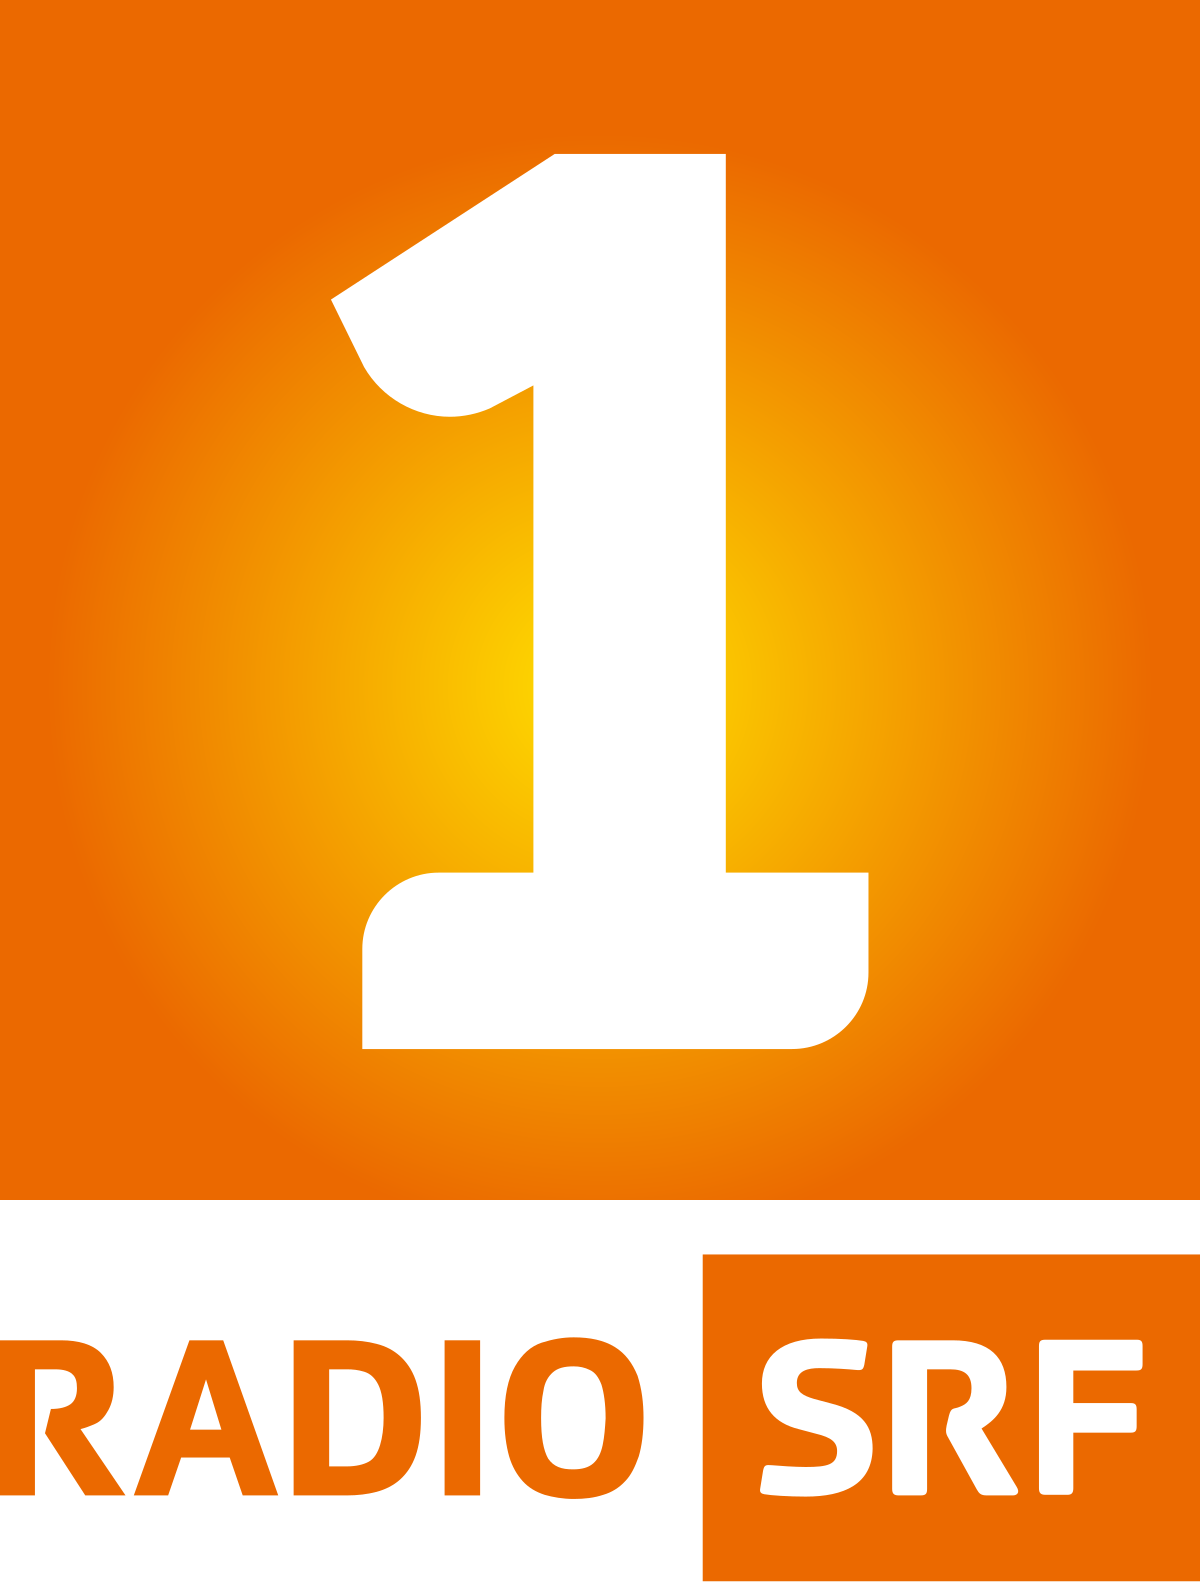 Radio SRF 1 – Wikipedia